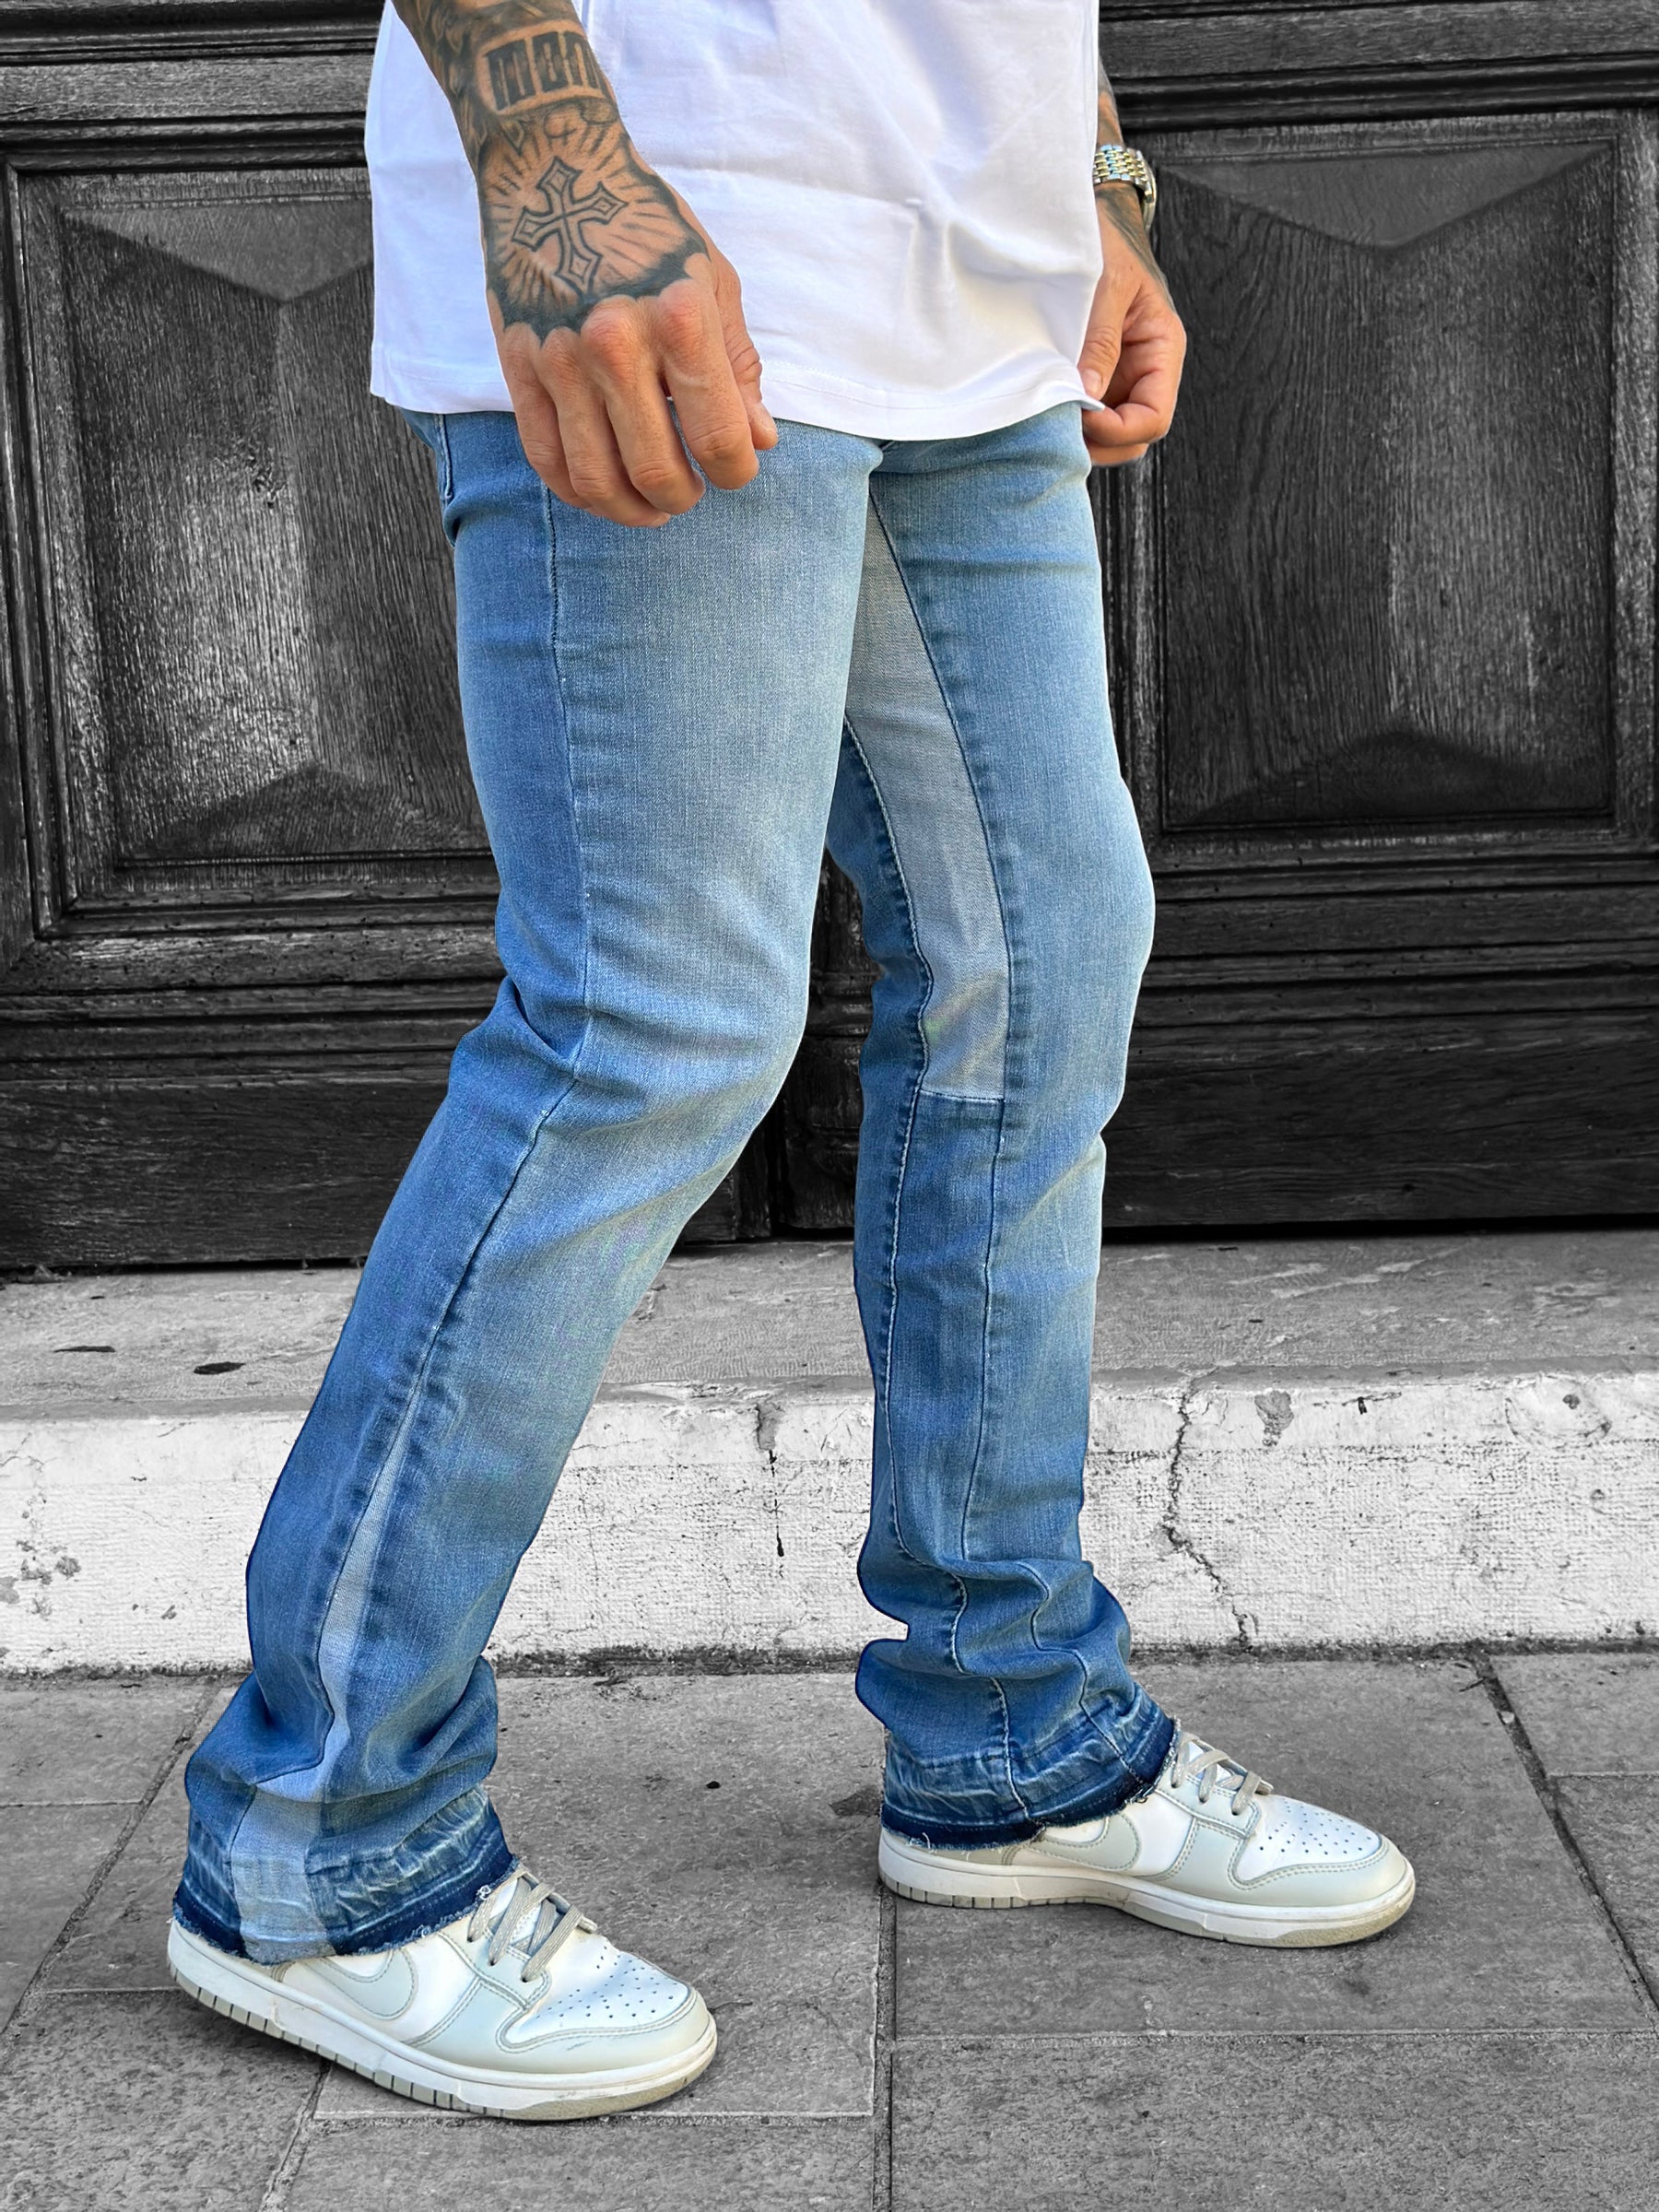 Sky blue flare jeans